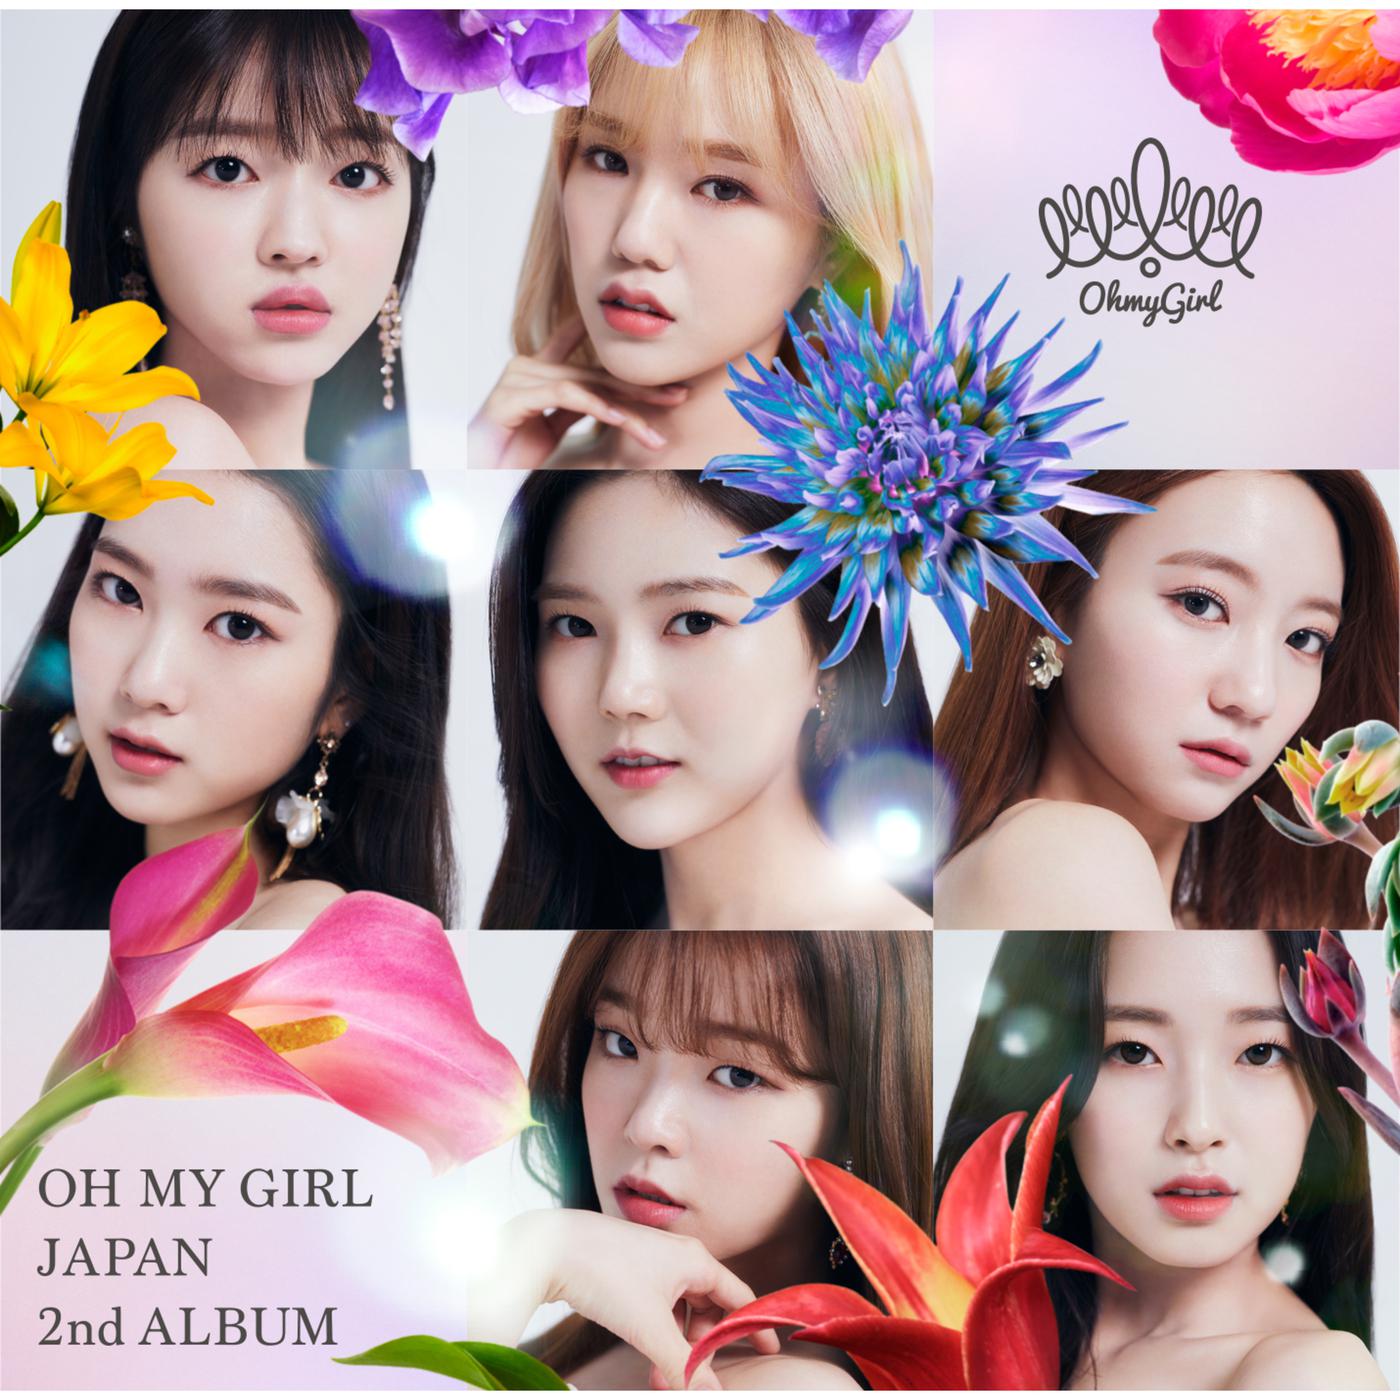 Touch My Heart歌词 歌手OH MY GIRL-专辑OH MY GIRL JAPAN 2nd ALBUM-单曲《Touch My Heart》LRC歌词下载